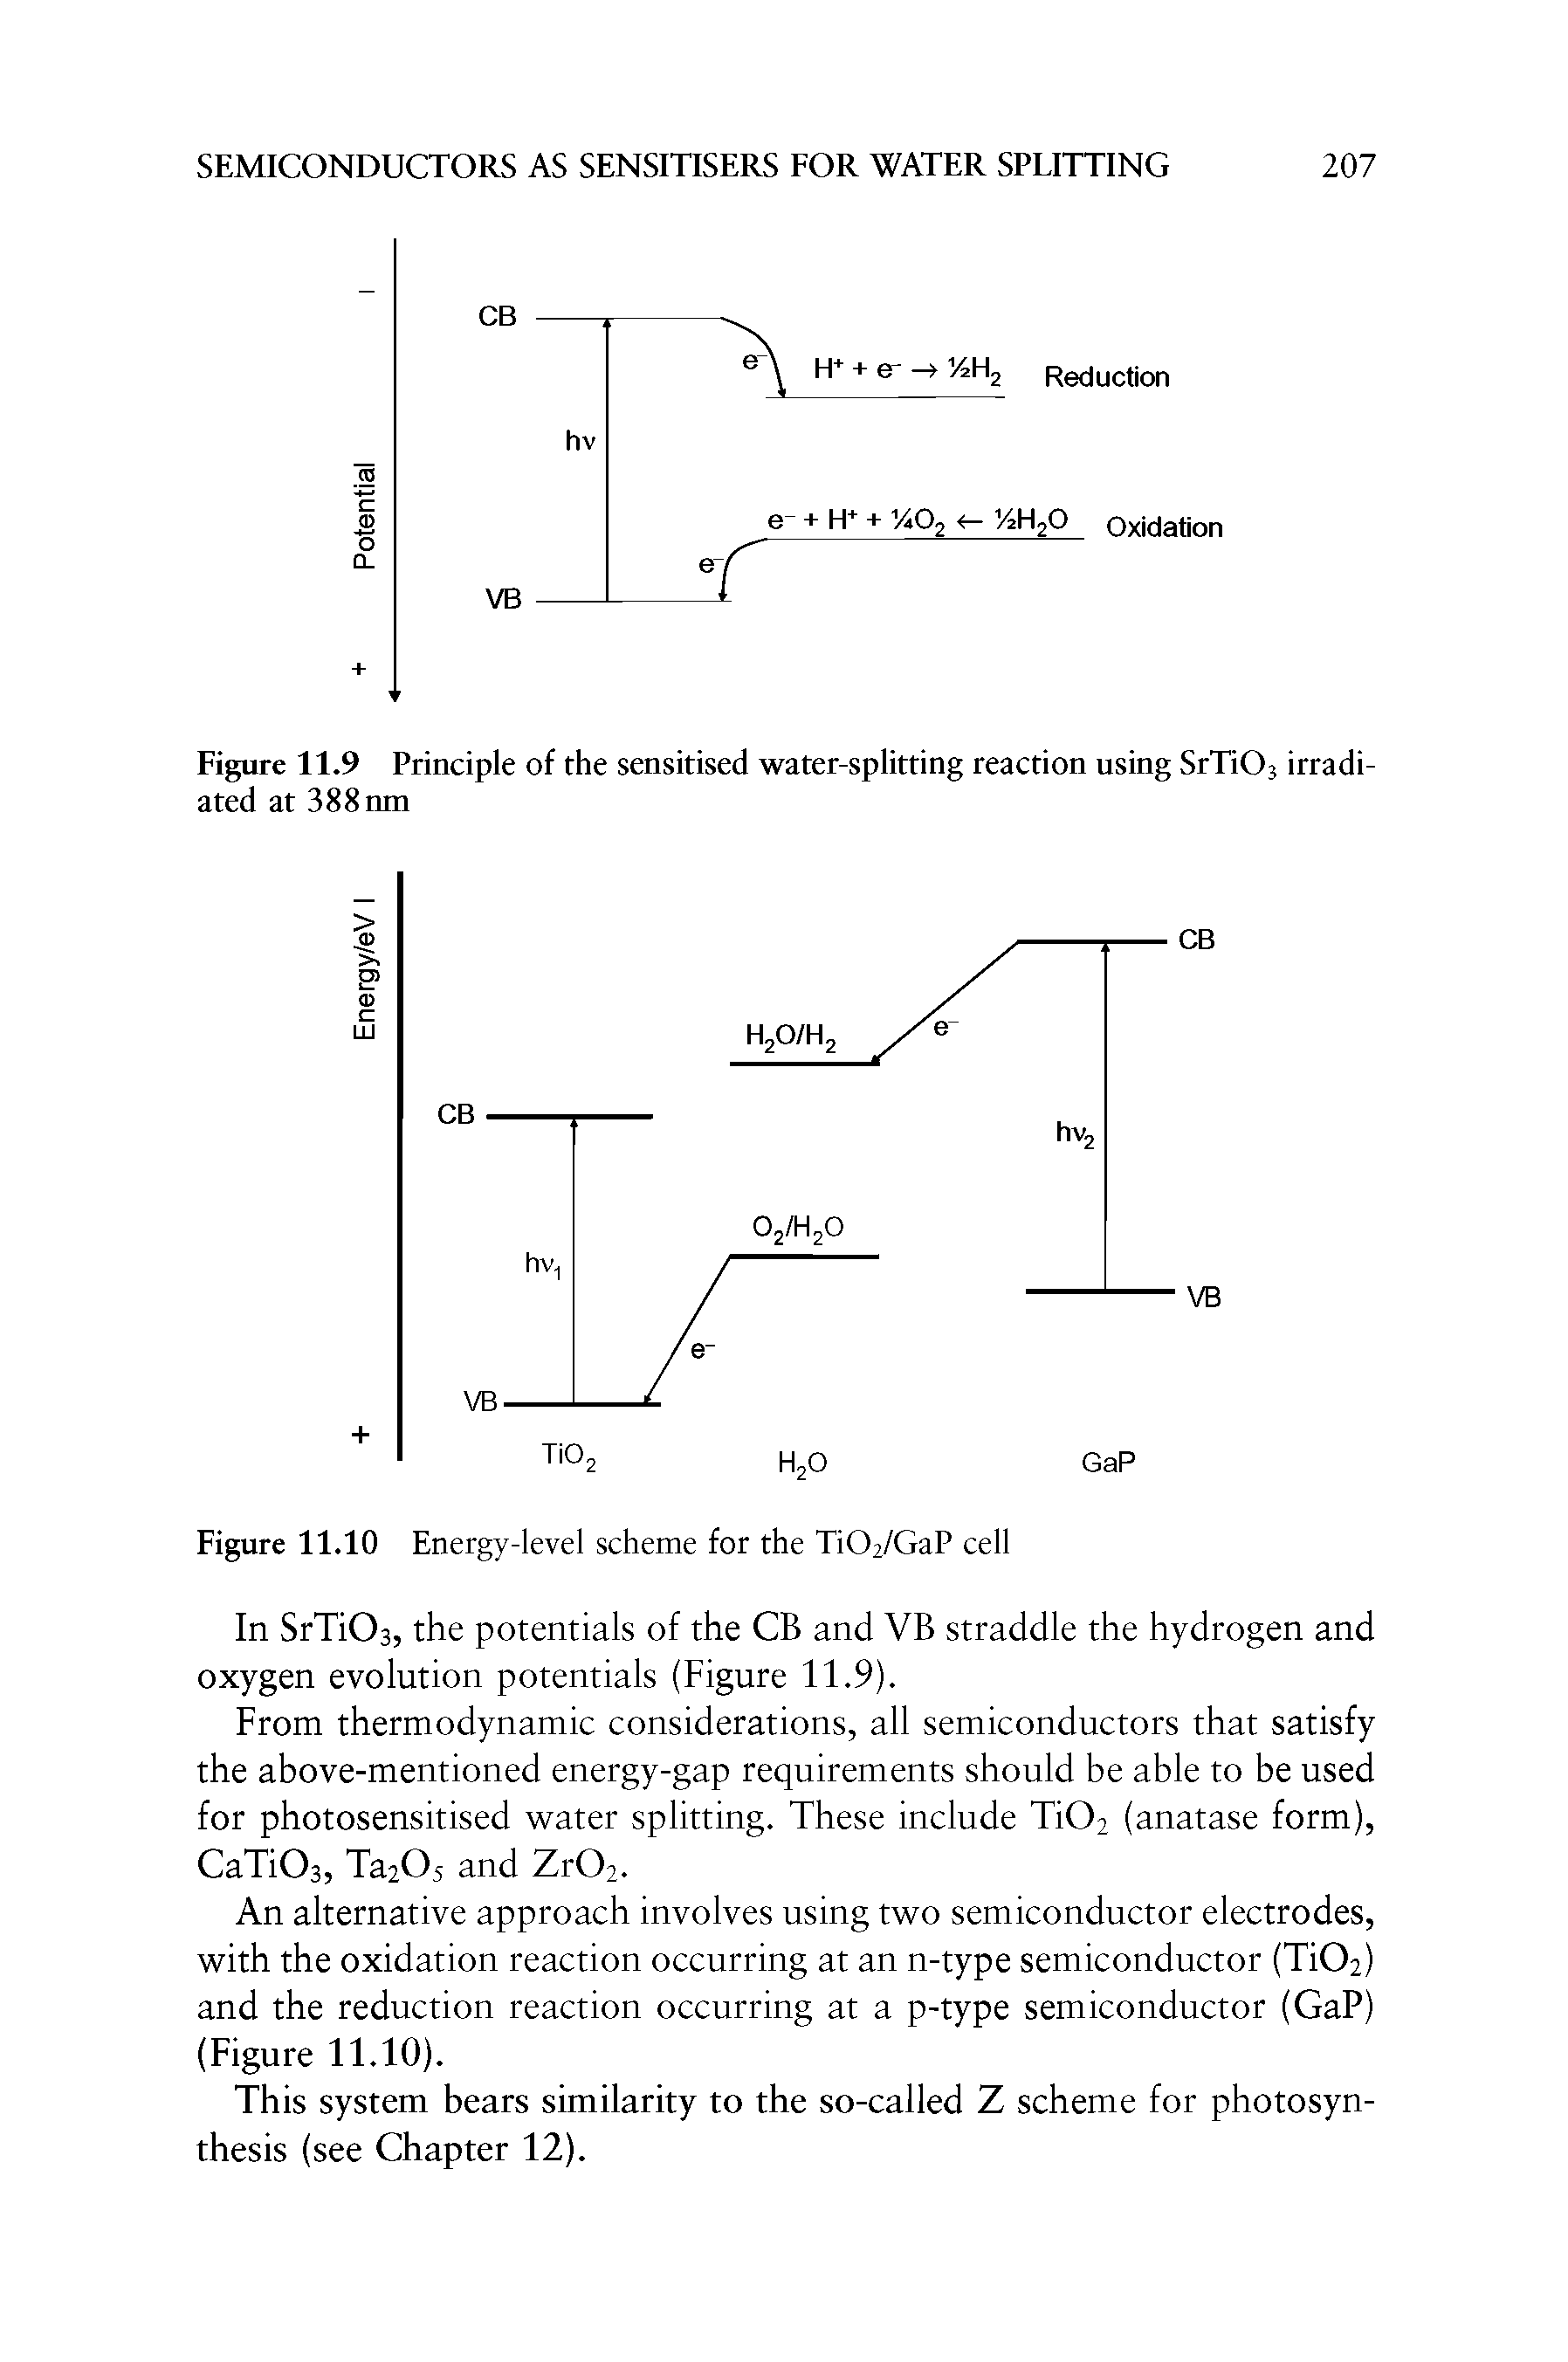 Figure 11.9 Principle of the sensitised water-splitting reaction using SrTiOj irradiated at 388 nm...